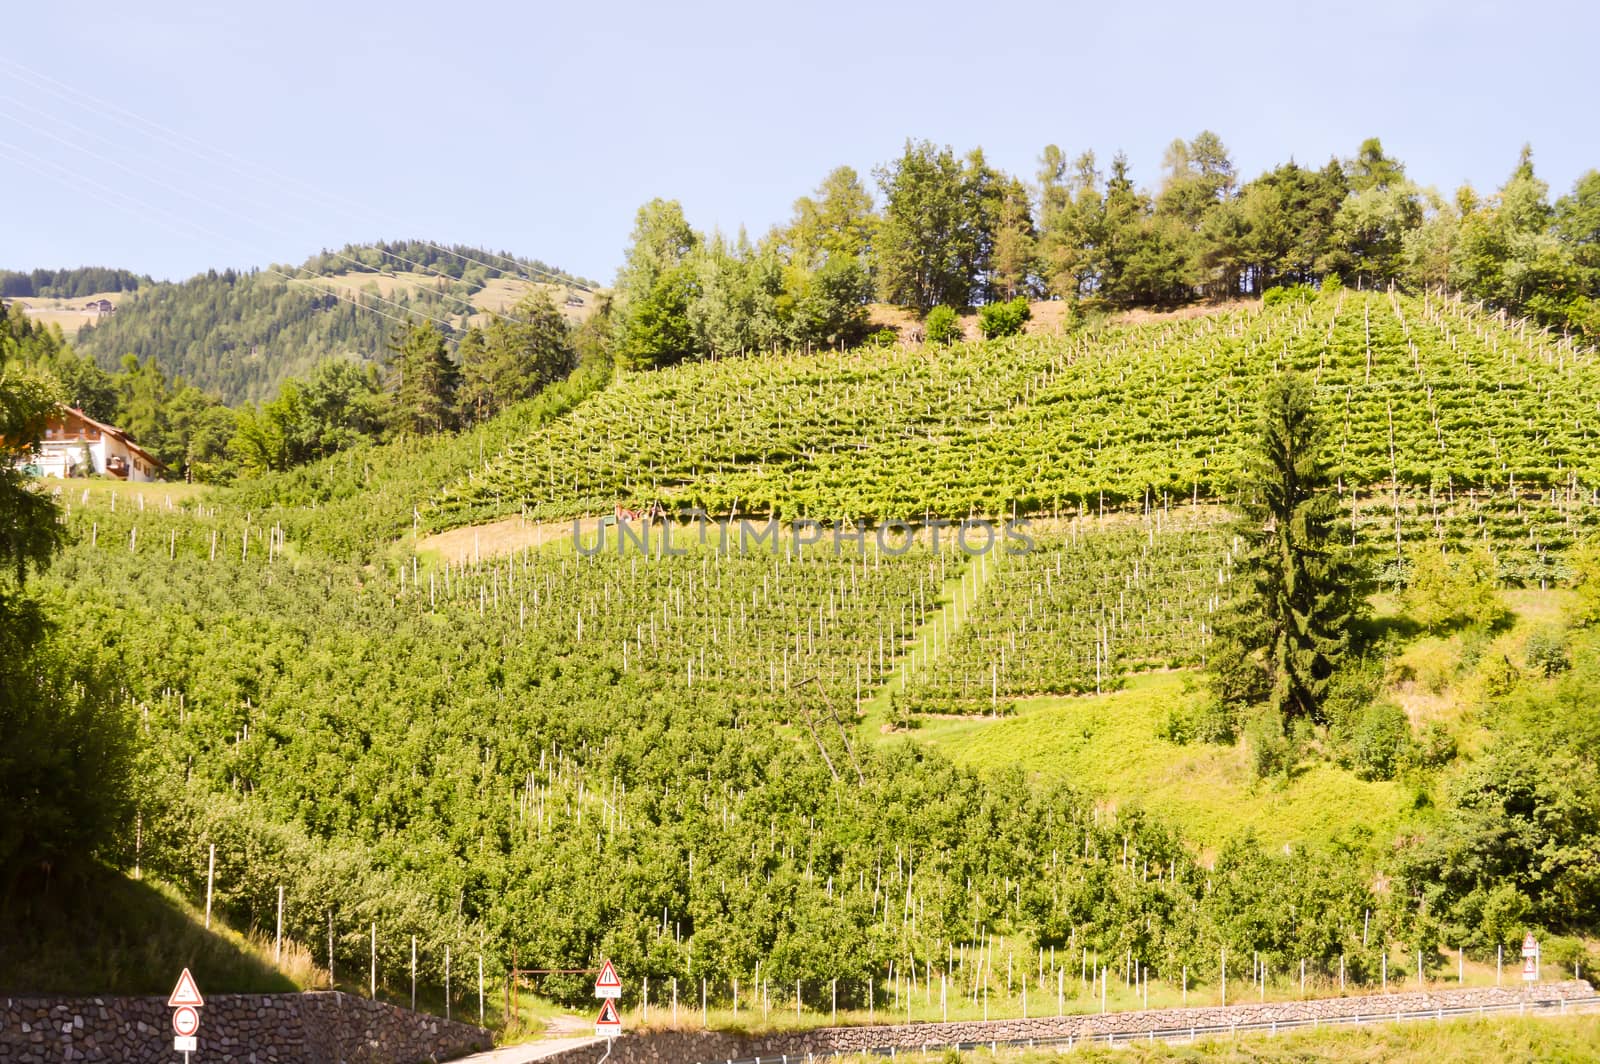 Apple and vineyards in the Trentino-Alto Adige region of Italy